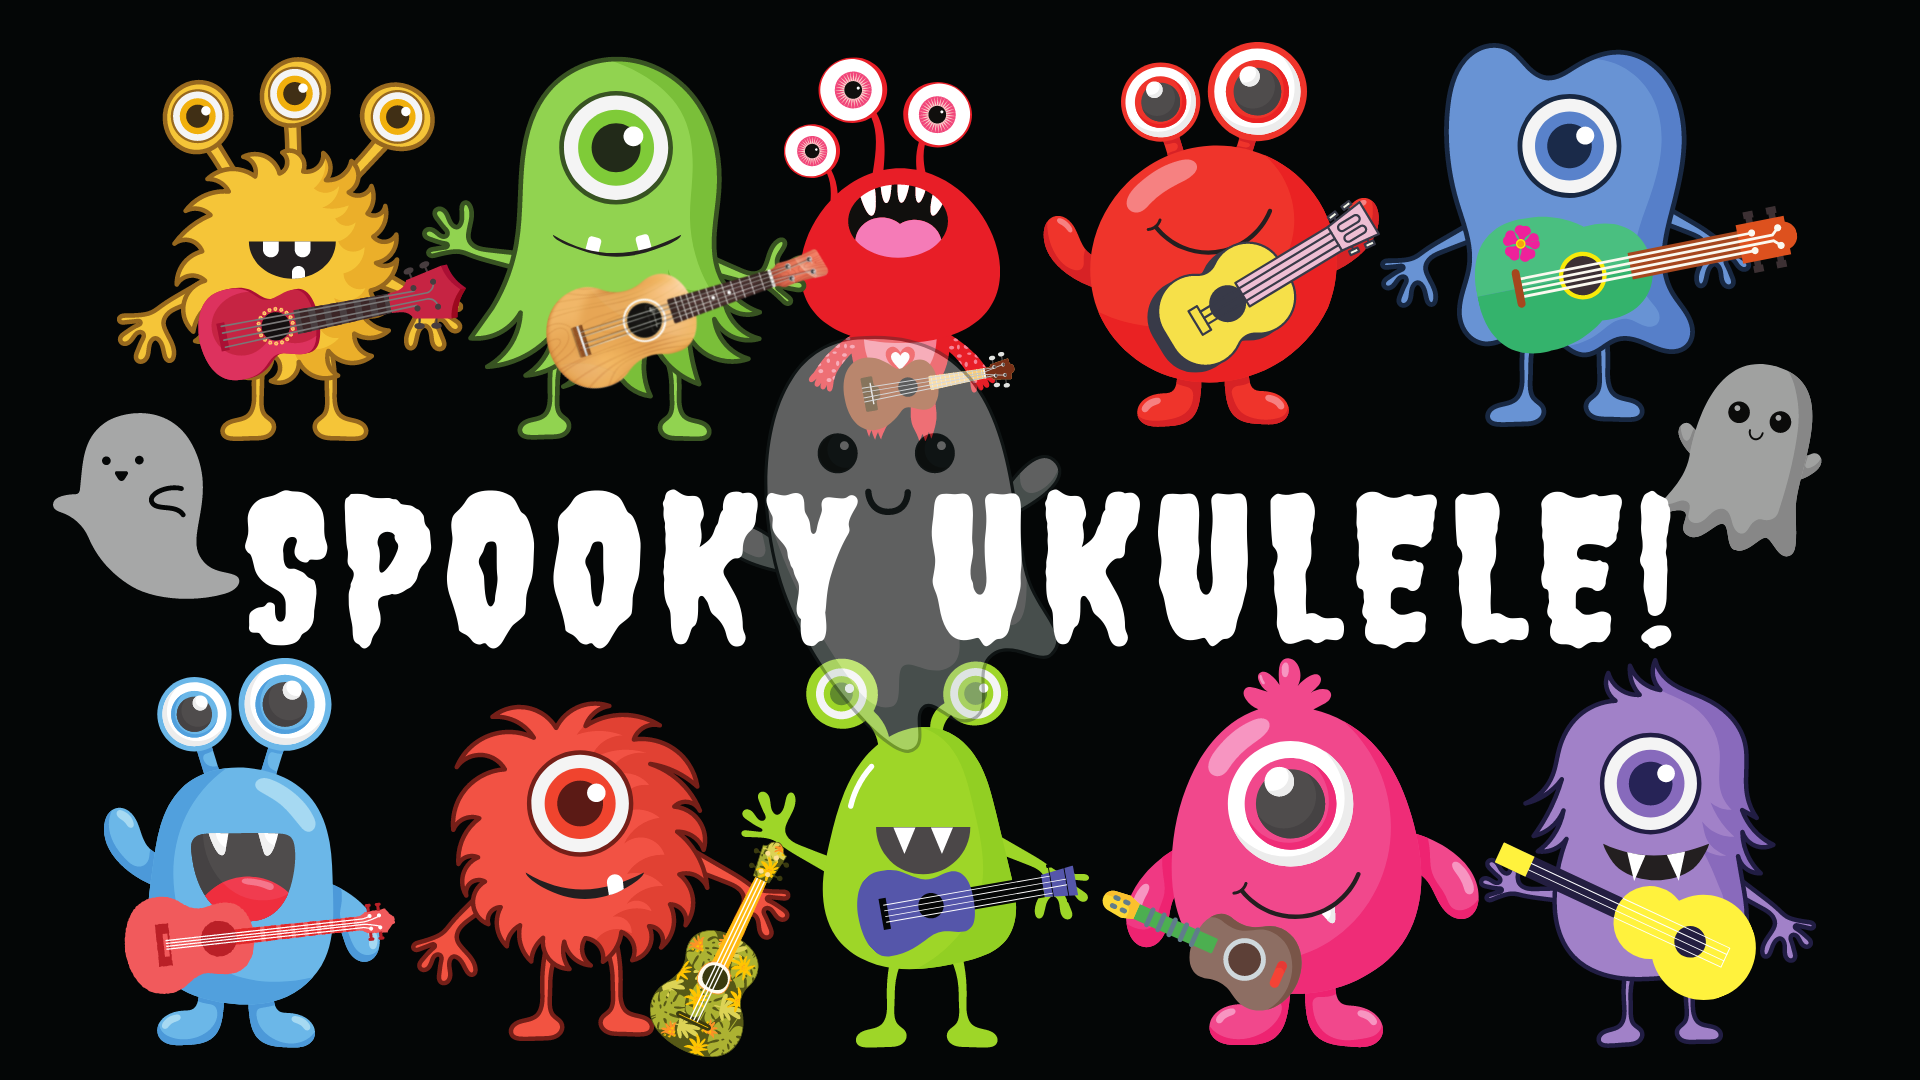 spooky ukulele course for kids